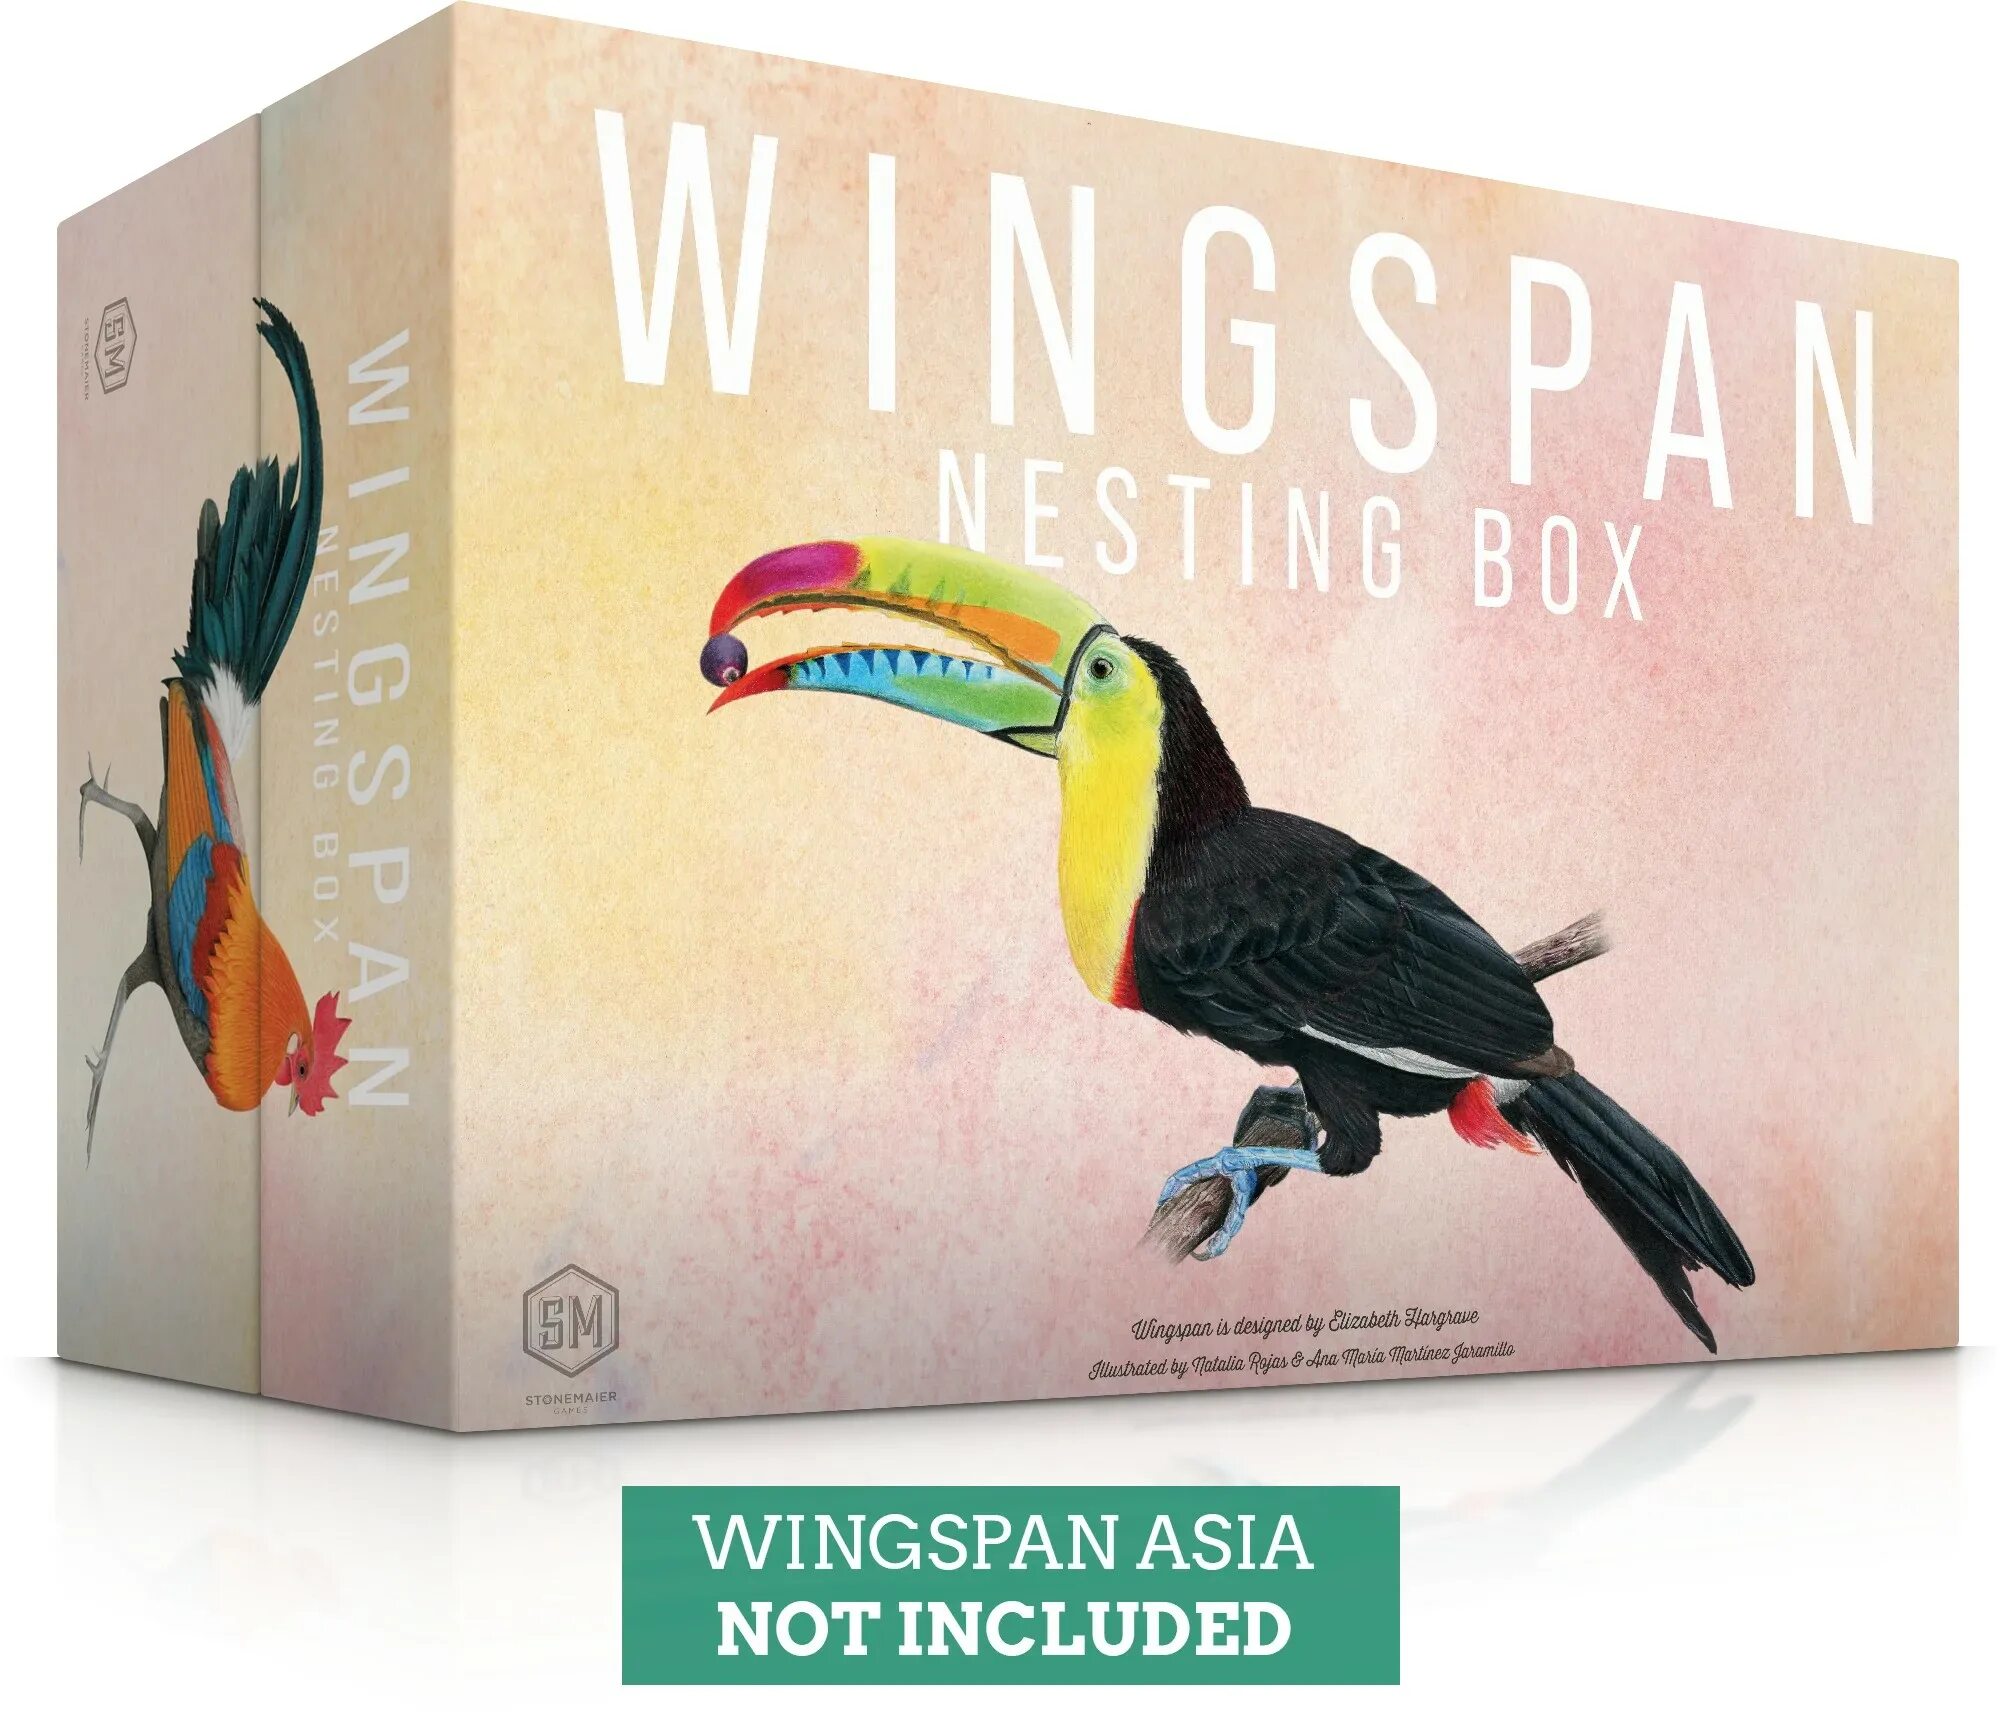 Wingspan Special Edition фон декоративный набор. Nesting box